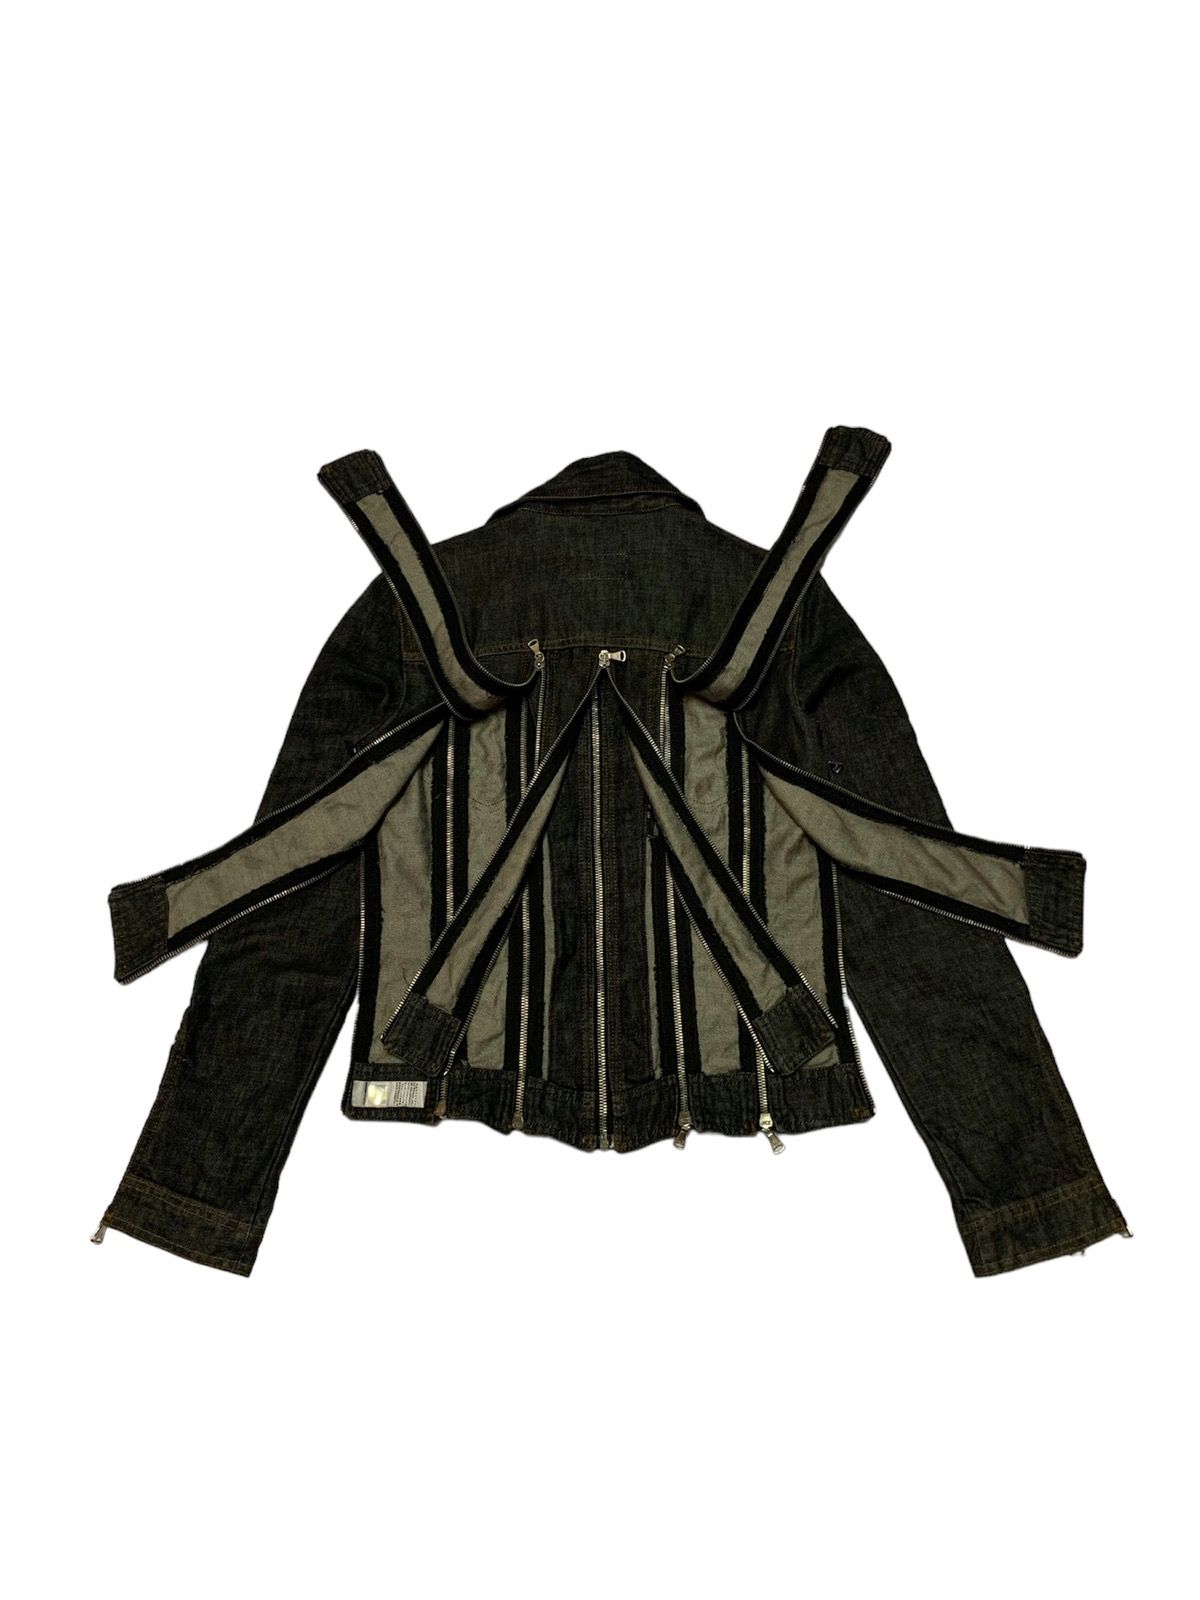 Rare D&G Dolce Gabbana Zipper 2004 Shredder Denim Jacket - 3